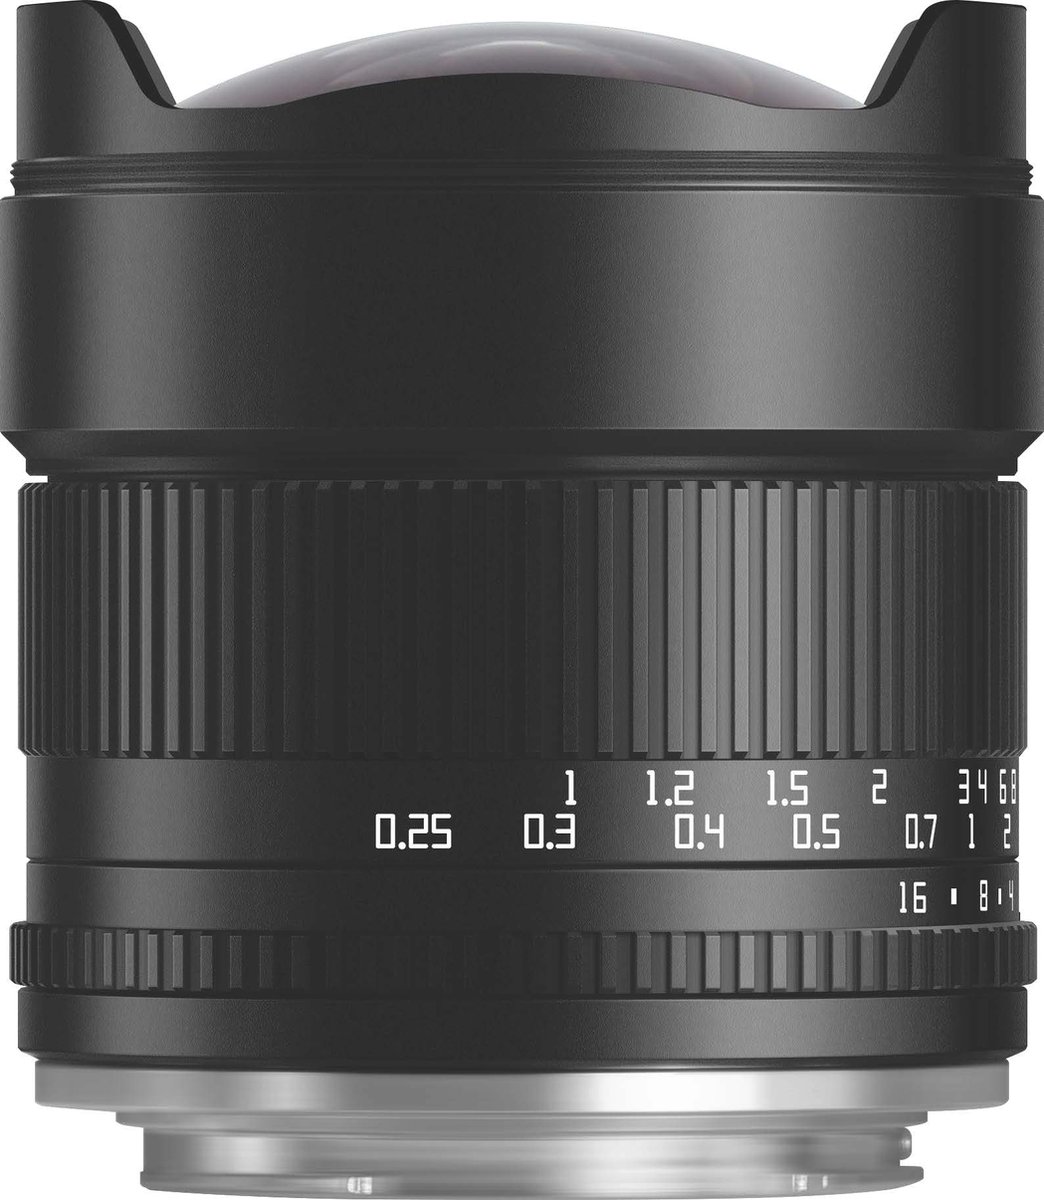 TTArtisan - 10mm F2 Asph. APS-C voor Nikon Z vatting, zwart